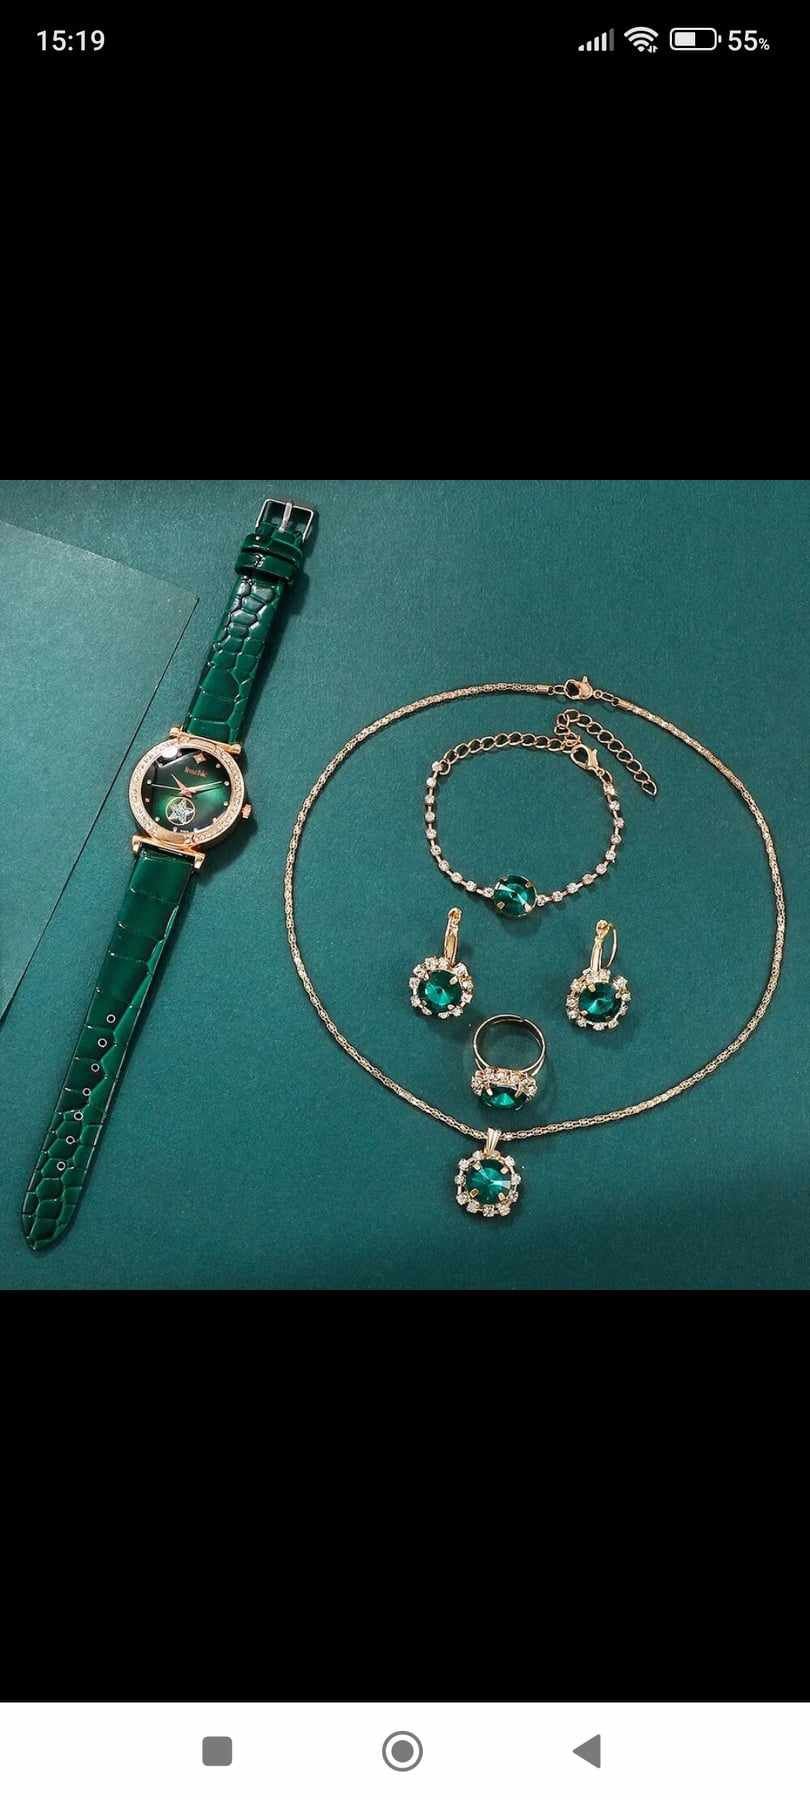 Zegarek damski z kompletem biżuterii